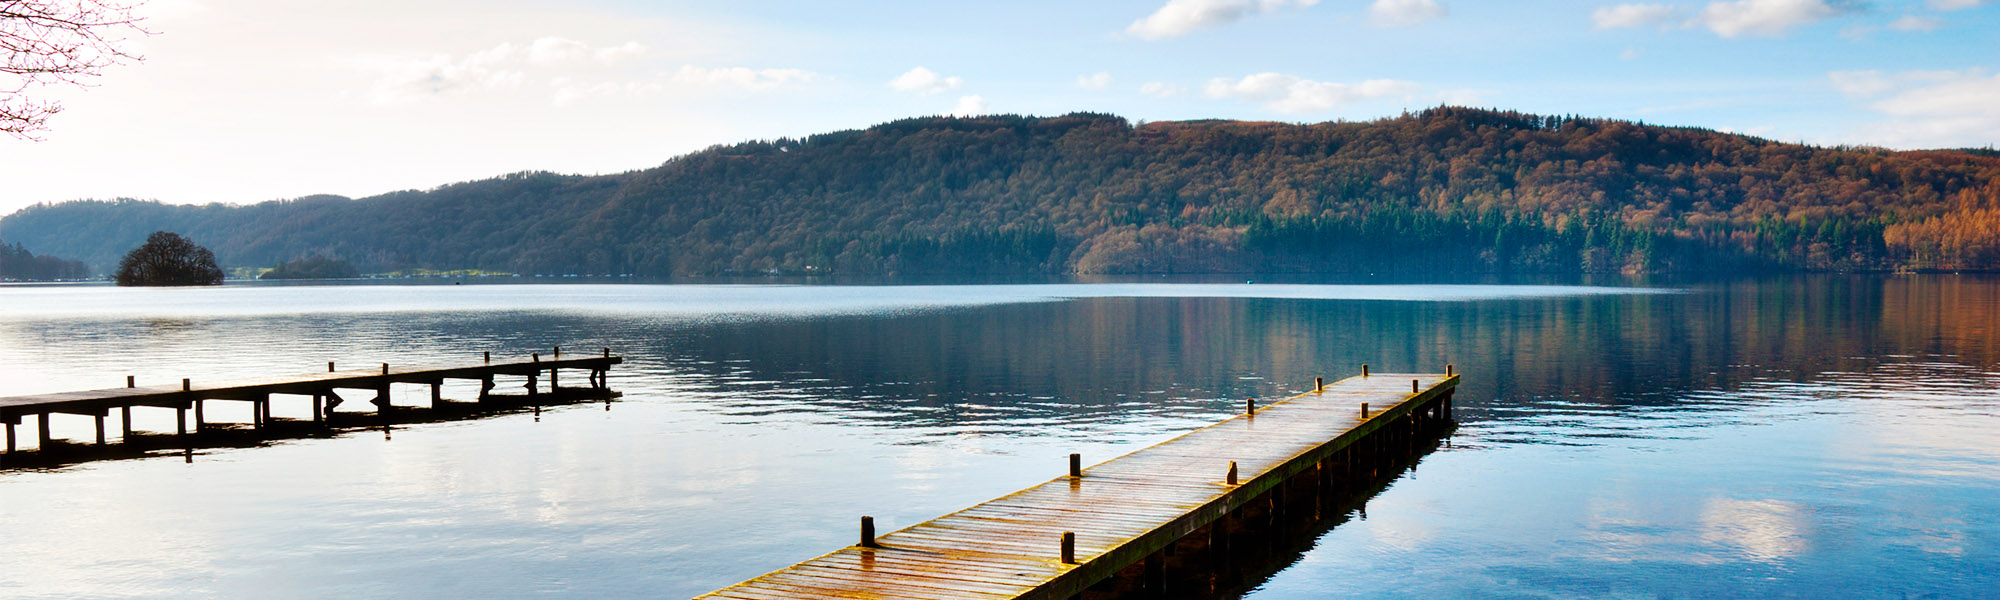 tourhub | Just Go Holidays | The Lovely English Lake District - JG Explorer 